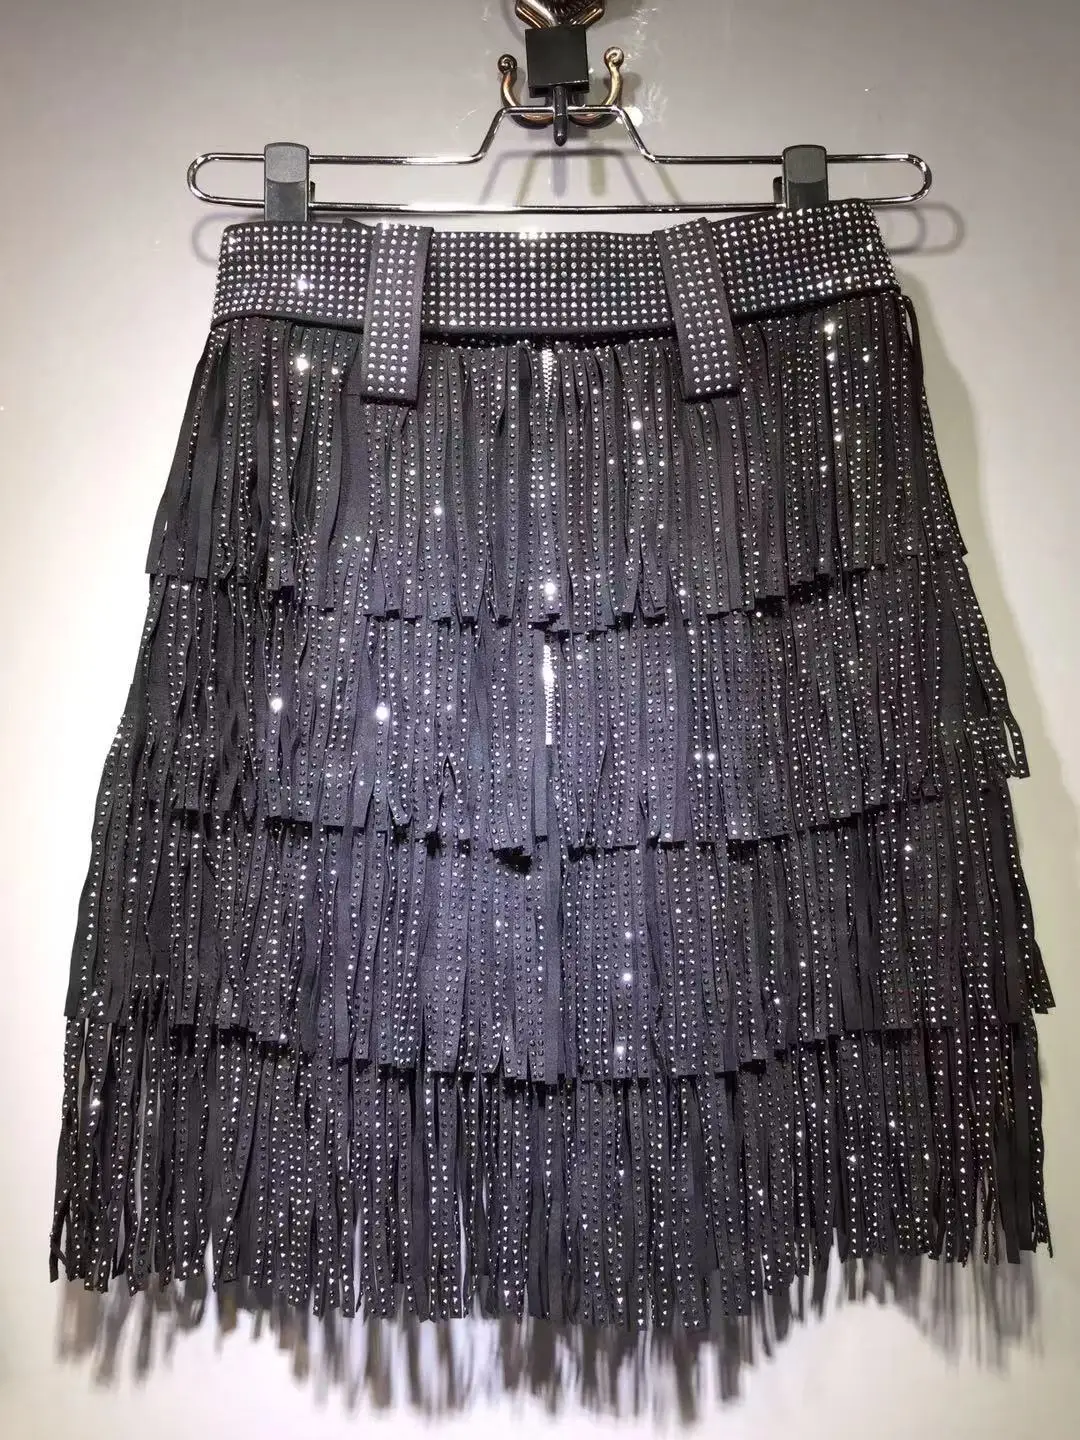 New Fashion Hot Drilling Tassel High Waist Cake Skirt with Belt Multi Layer Sexy Clubwear Party Mini Skirts Ladies Short Skirt